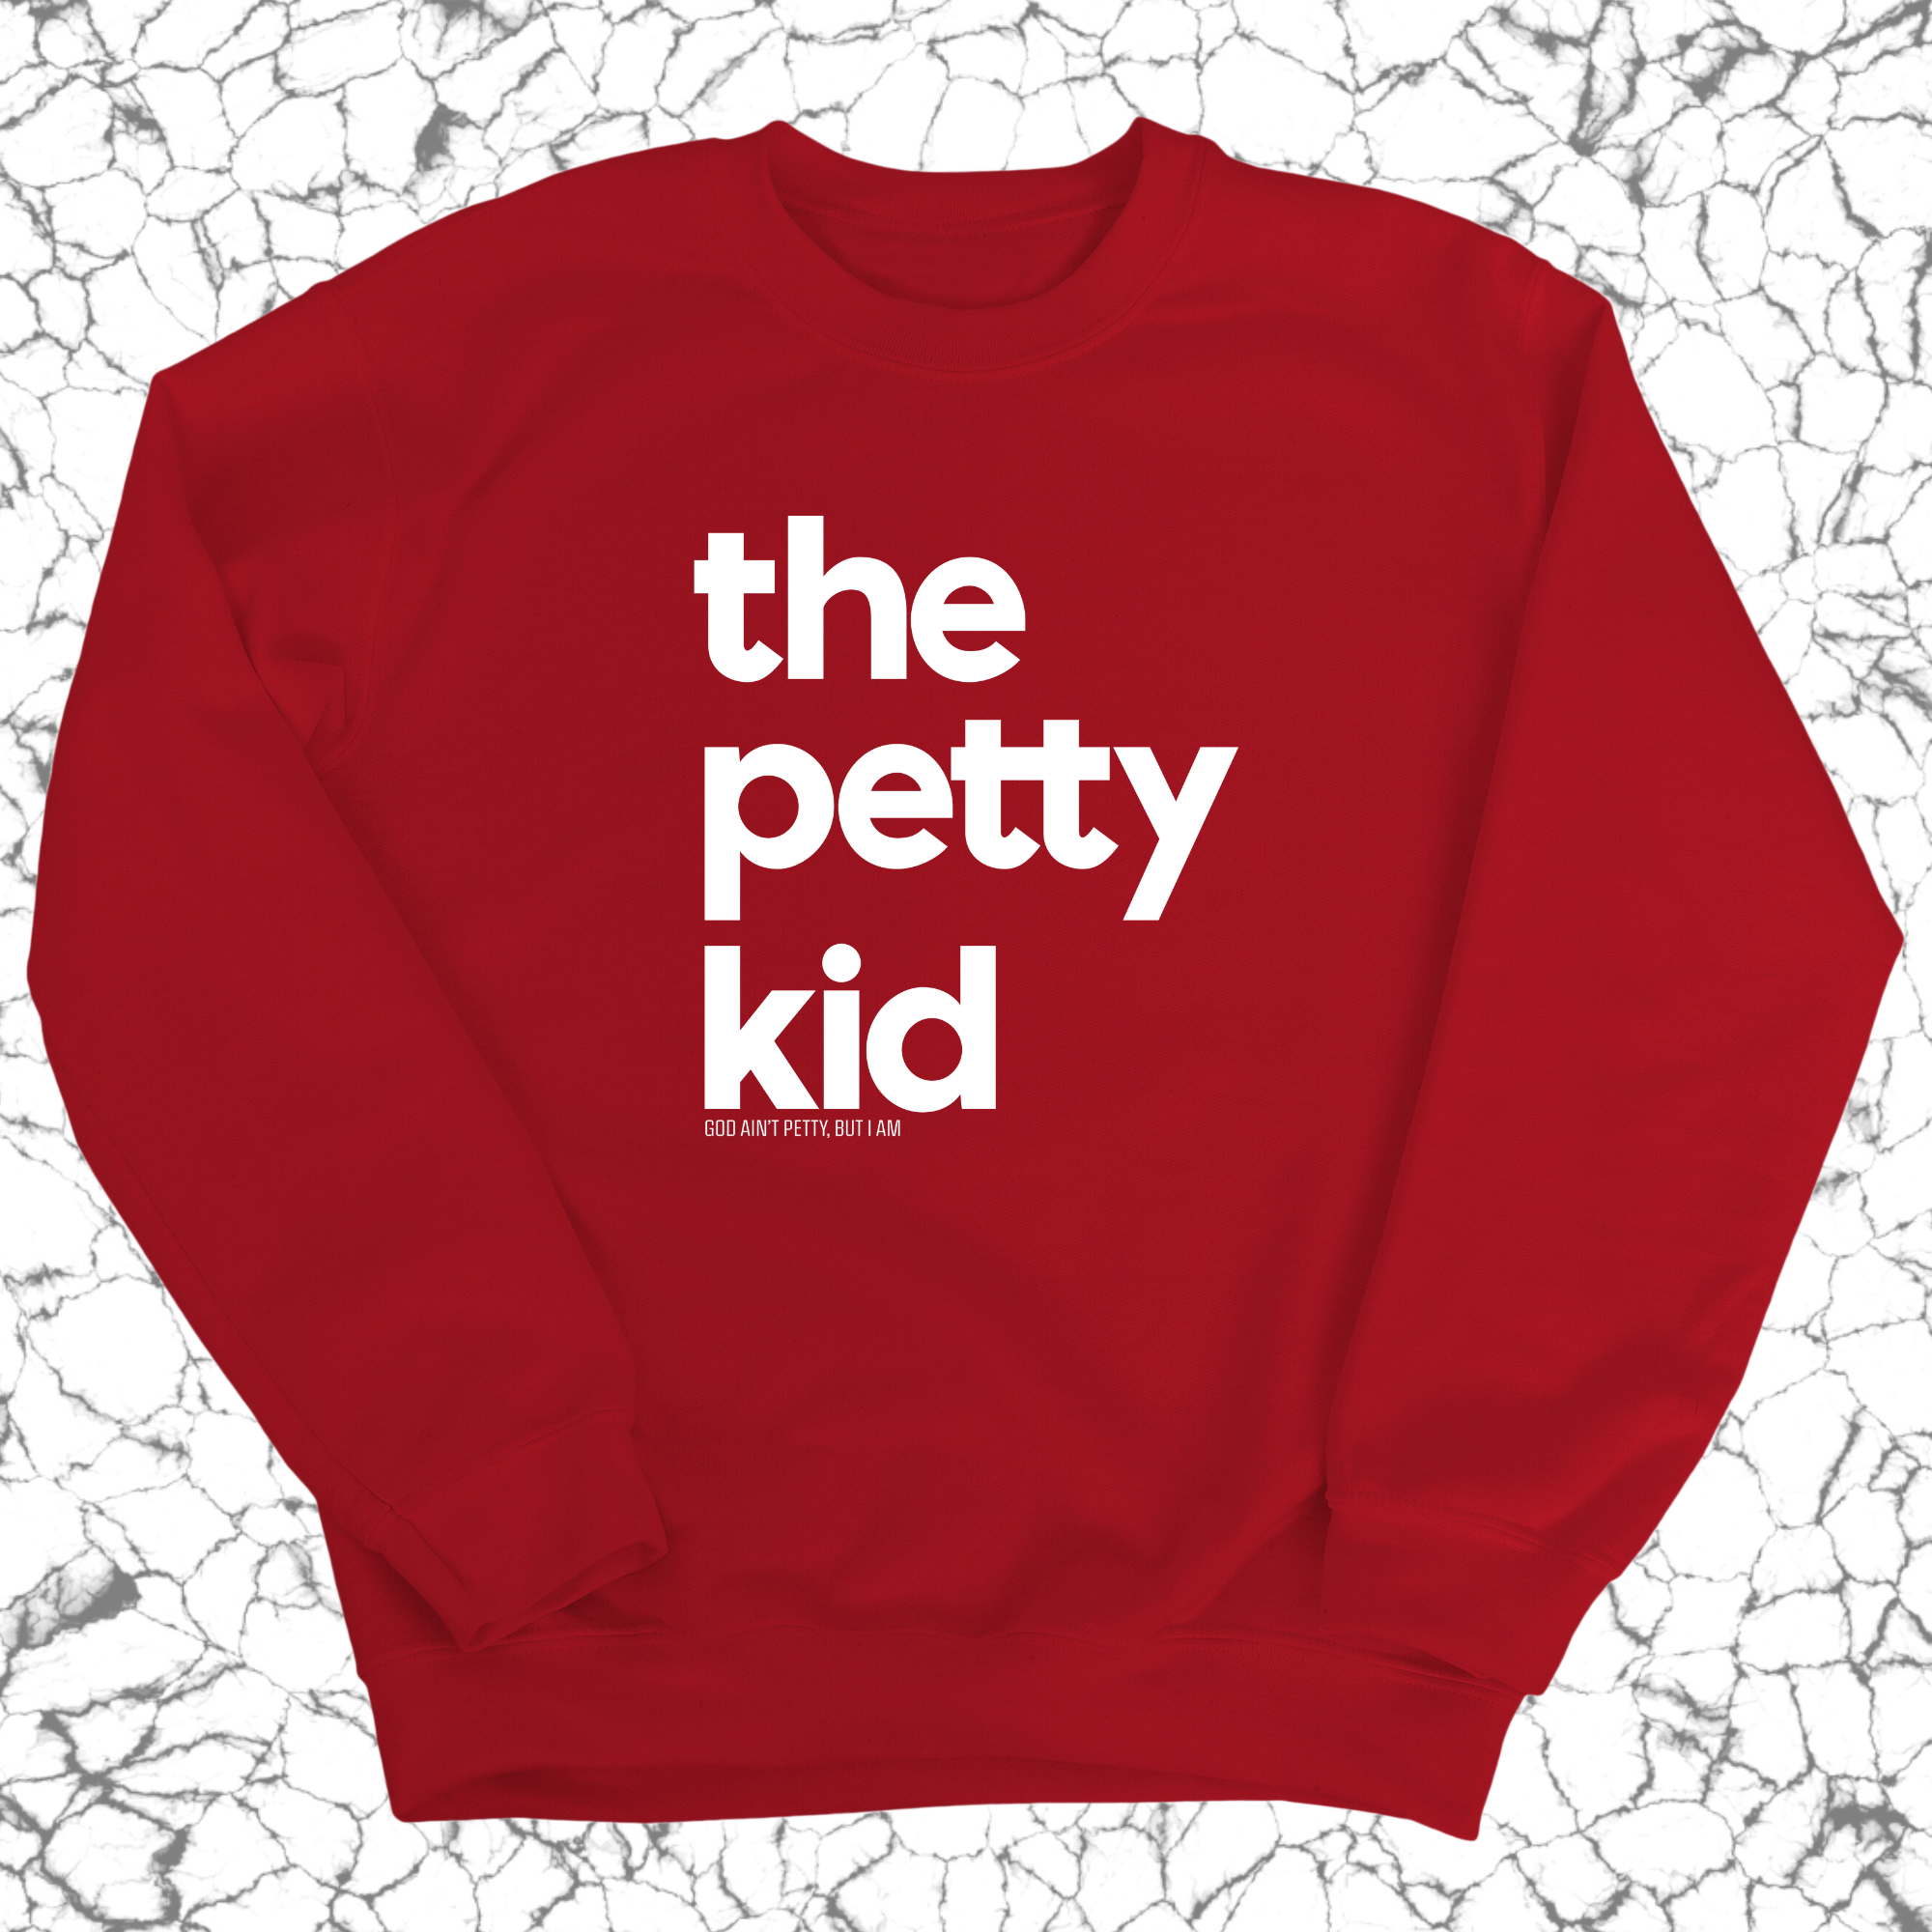 The Petty Kid Unisex Sweatshirt (adult size)-Sweatshirt-The Original God Ain't Petty But I Am